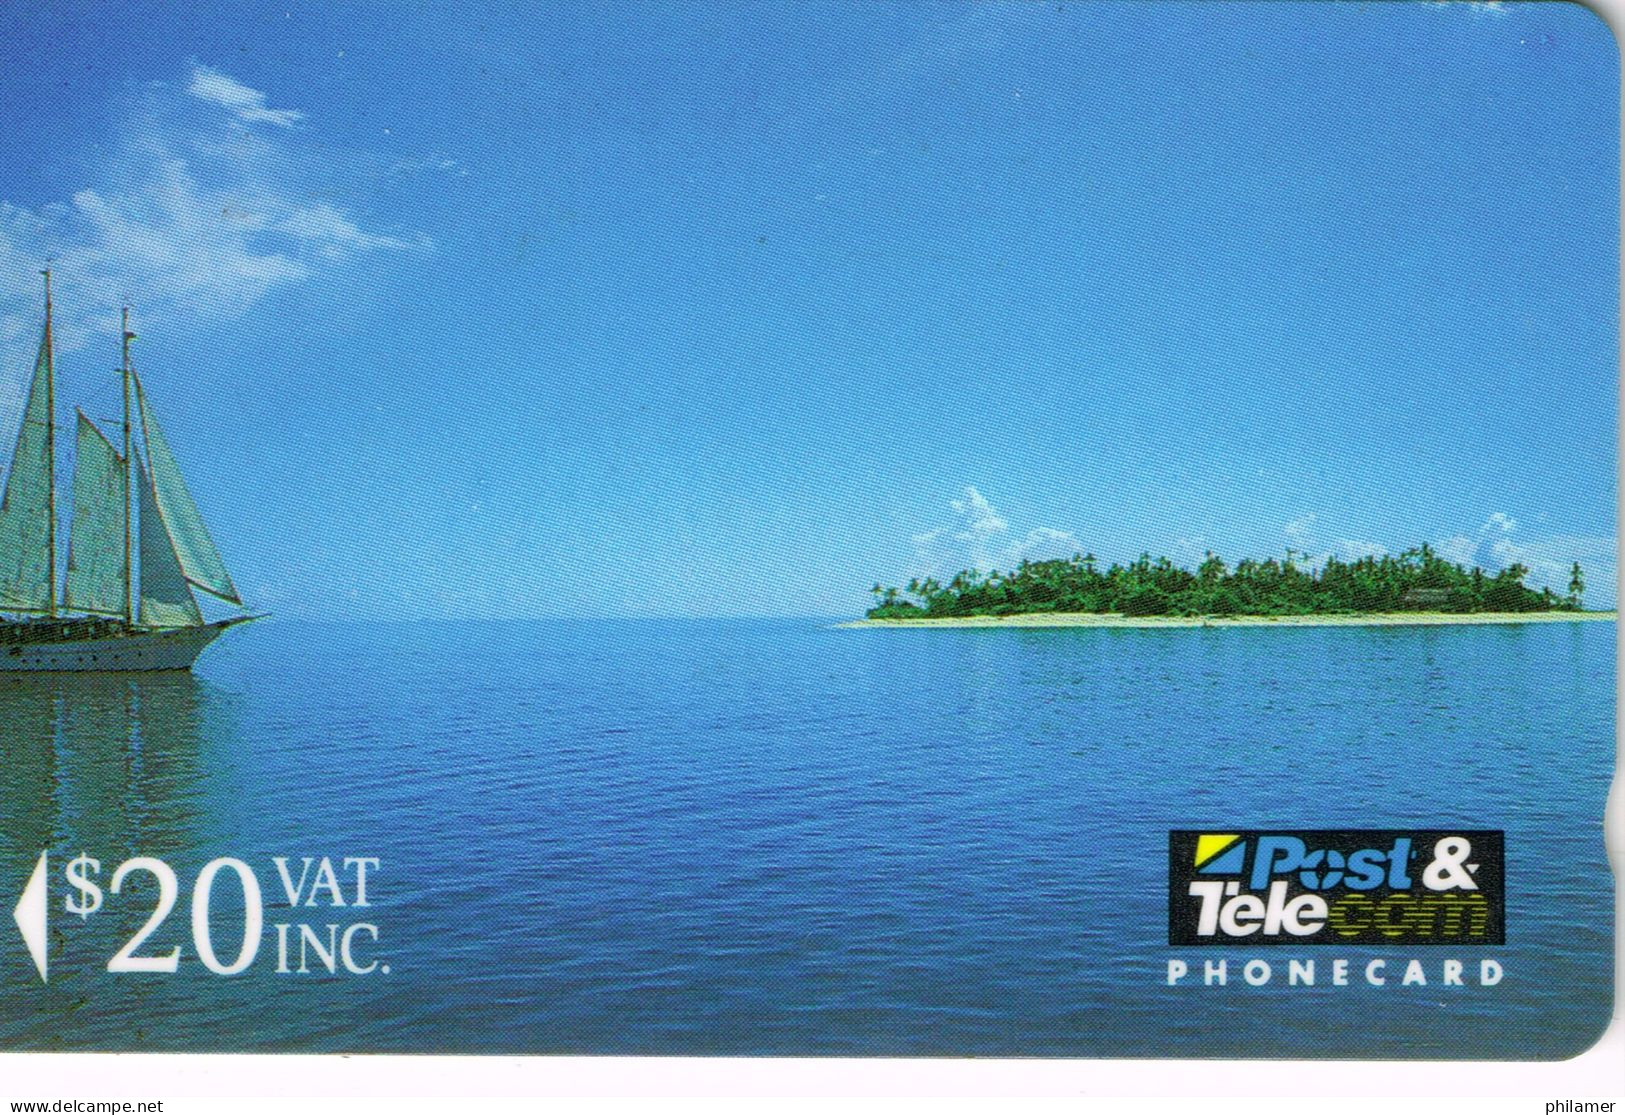 FIDJI FIJI Telecarte Phonecard CARTE MAGNETIQUE 20 $ SUVA NATURE GIFT ONE ISLAND ATOLL VOILIER OCEAN TOURISME UT BE - Fidschi